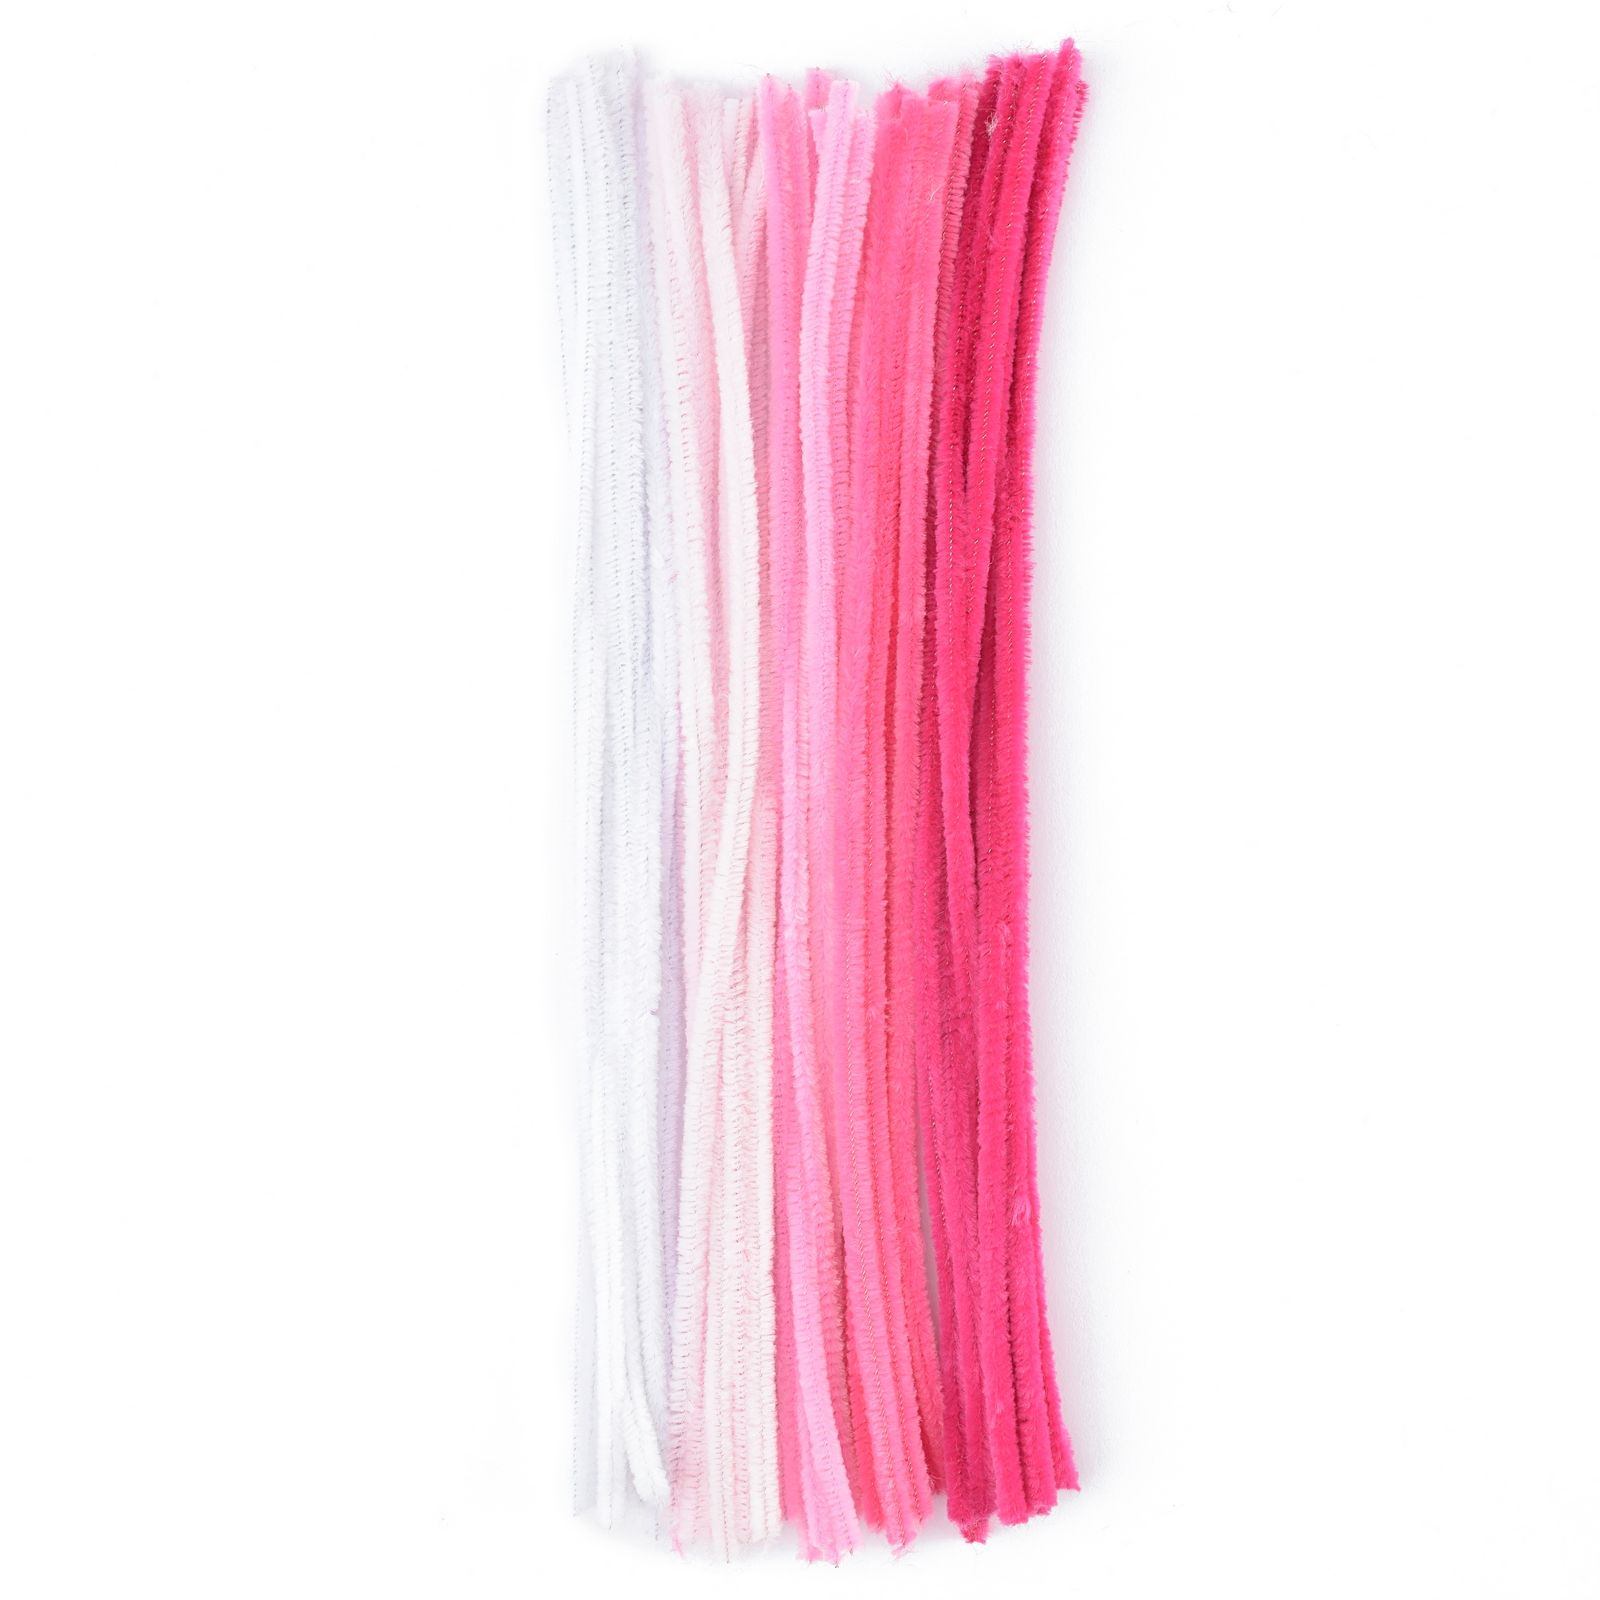 Vaessen Creative • Pipe Cleaners 6mm 50pcs 30cm Pink